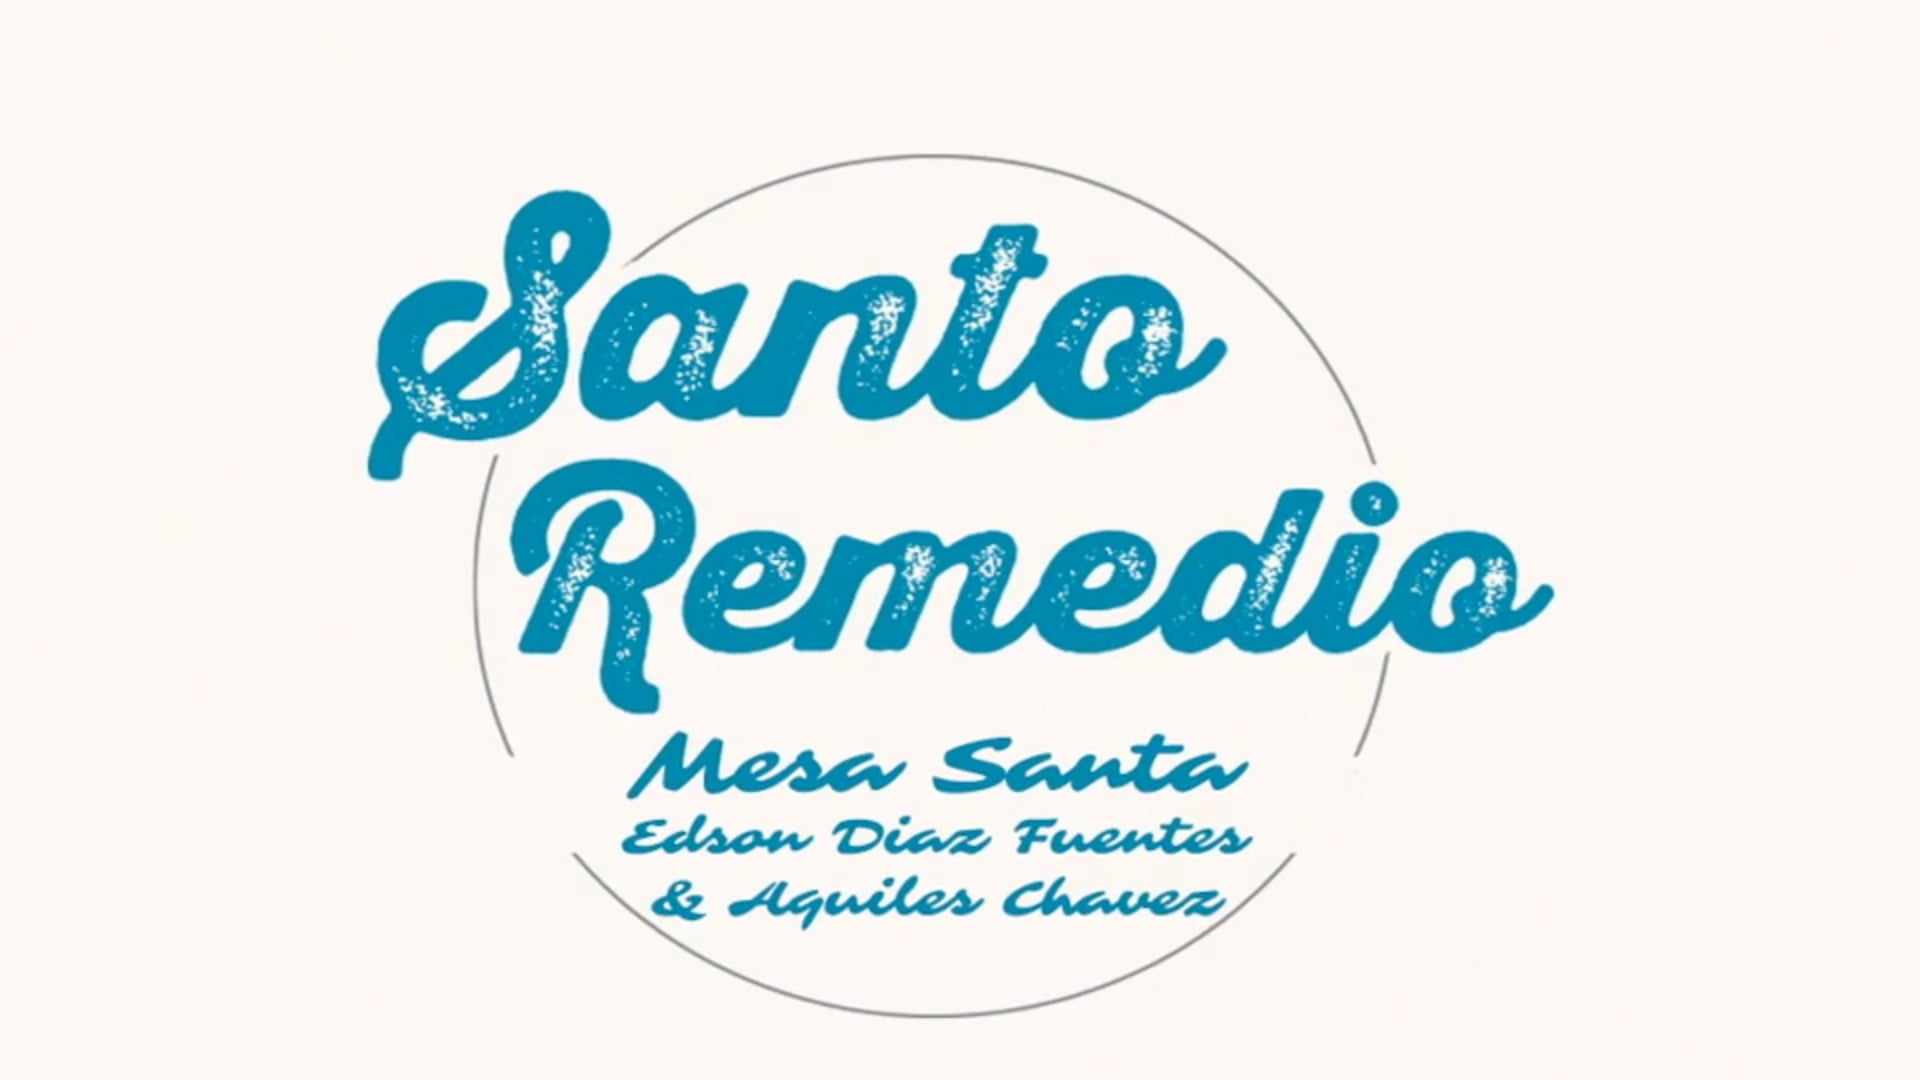 SANTO REMEDIO "MESA SANTA" EDSON DIAZ & AQUILES CHAVEZ